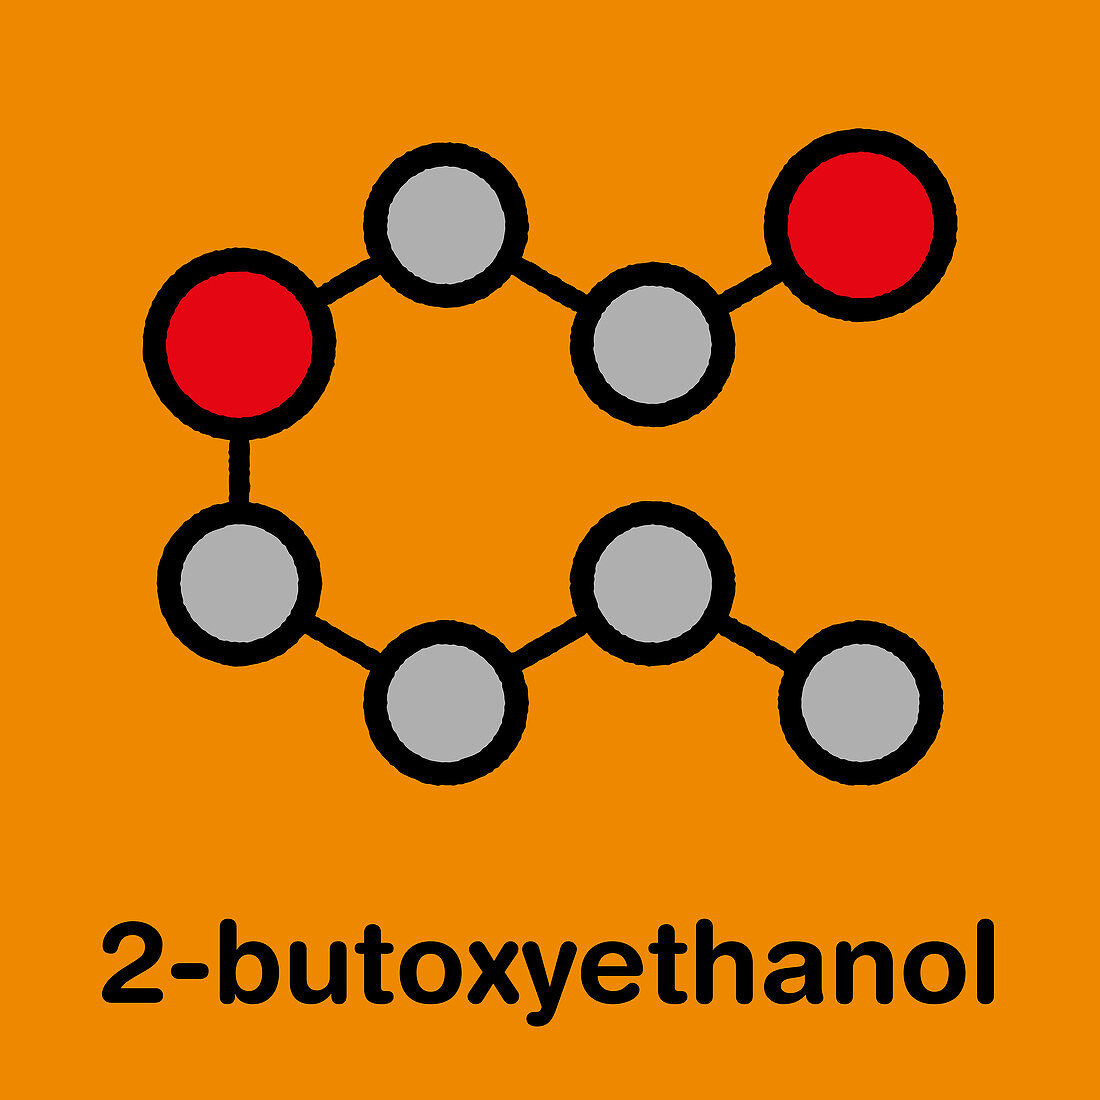 2-butoxyethanol solvent molecule, illustration